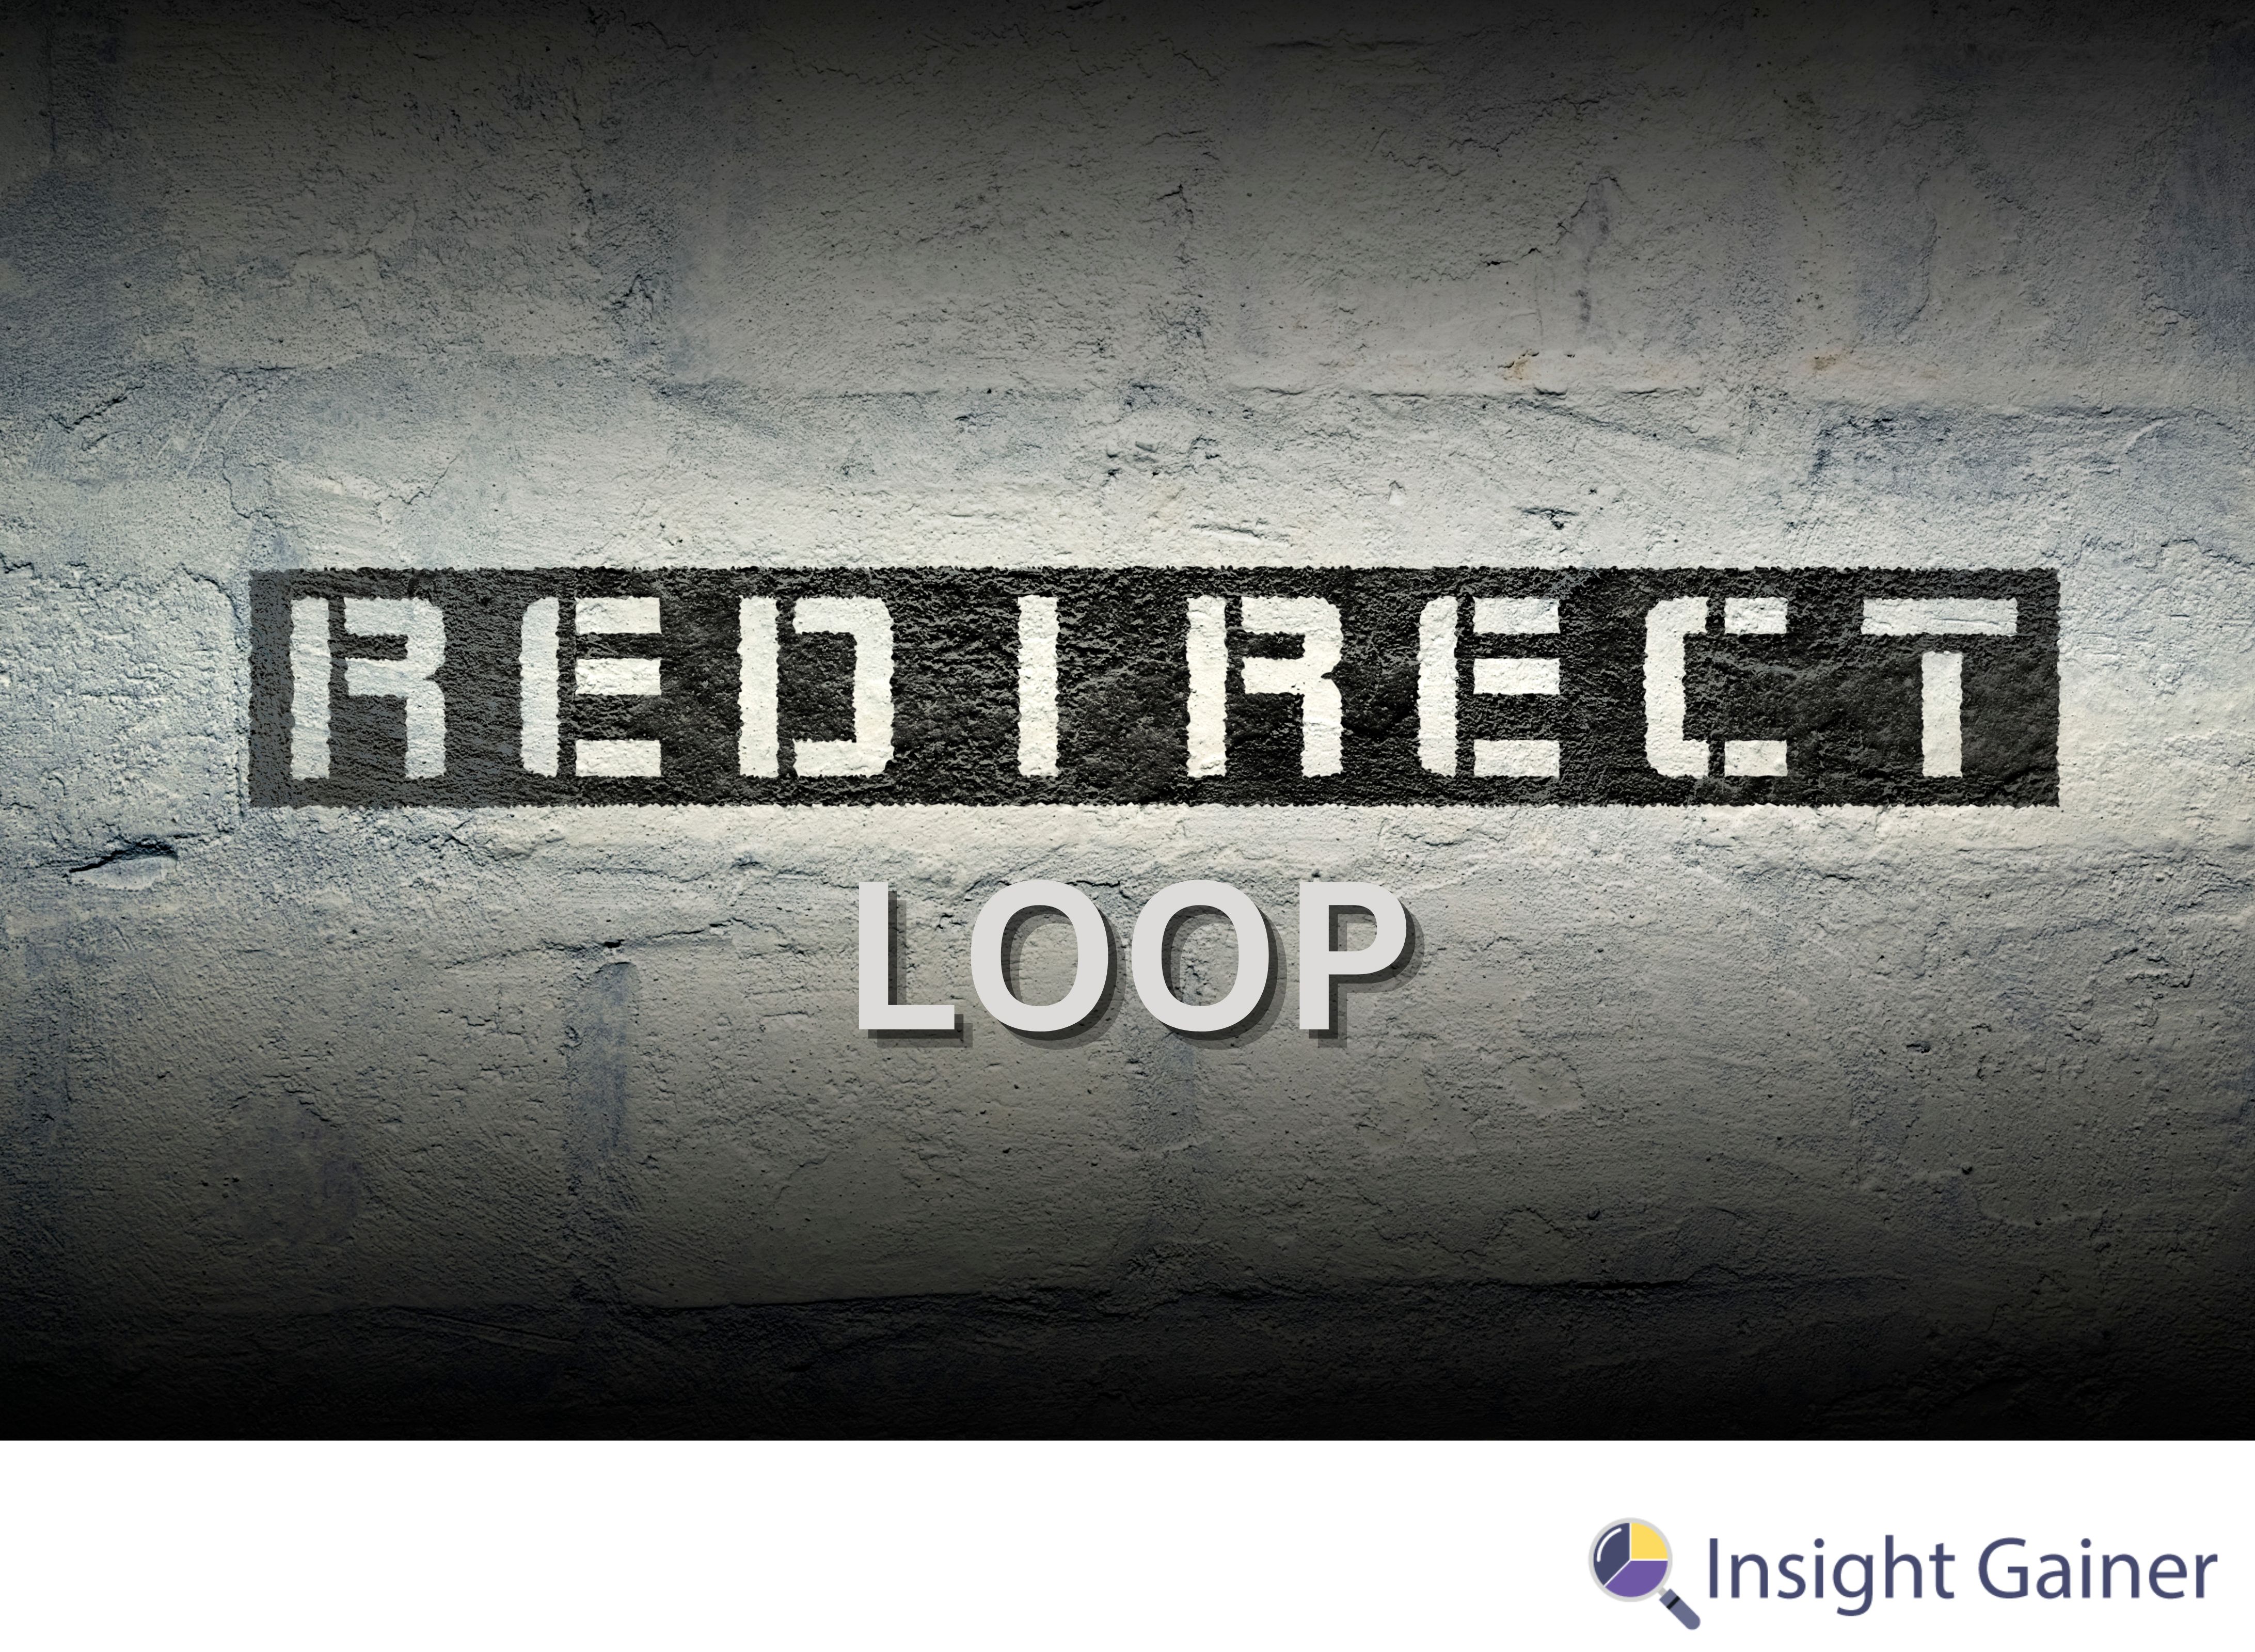 Redirect Loop, Insight Gainer